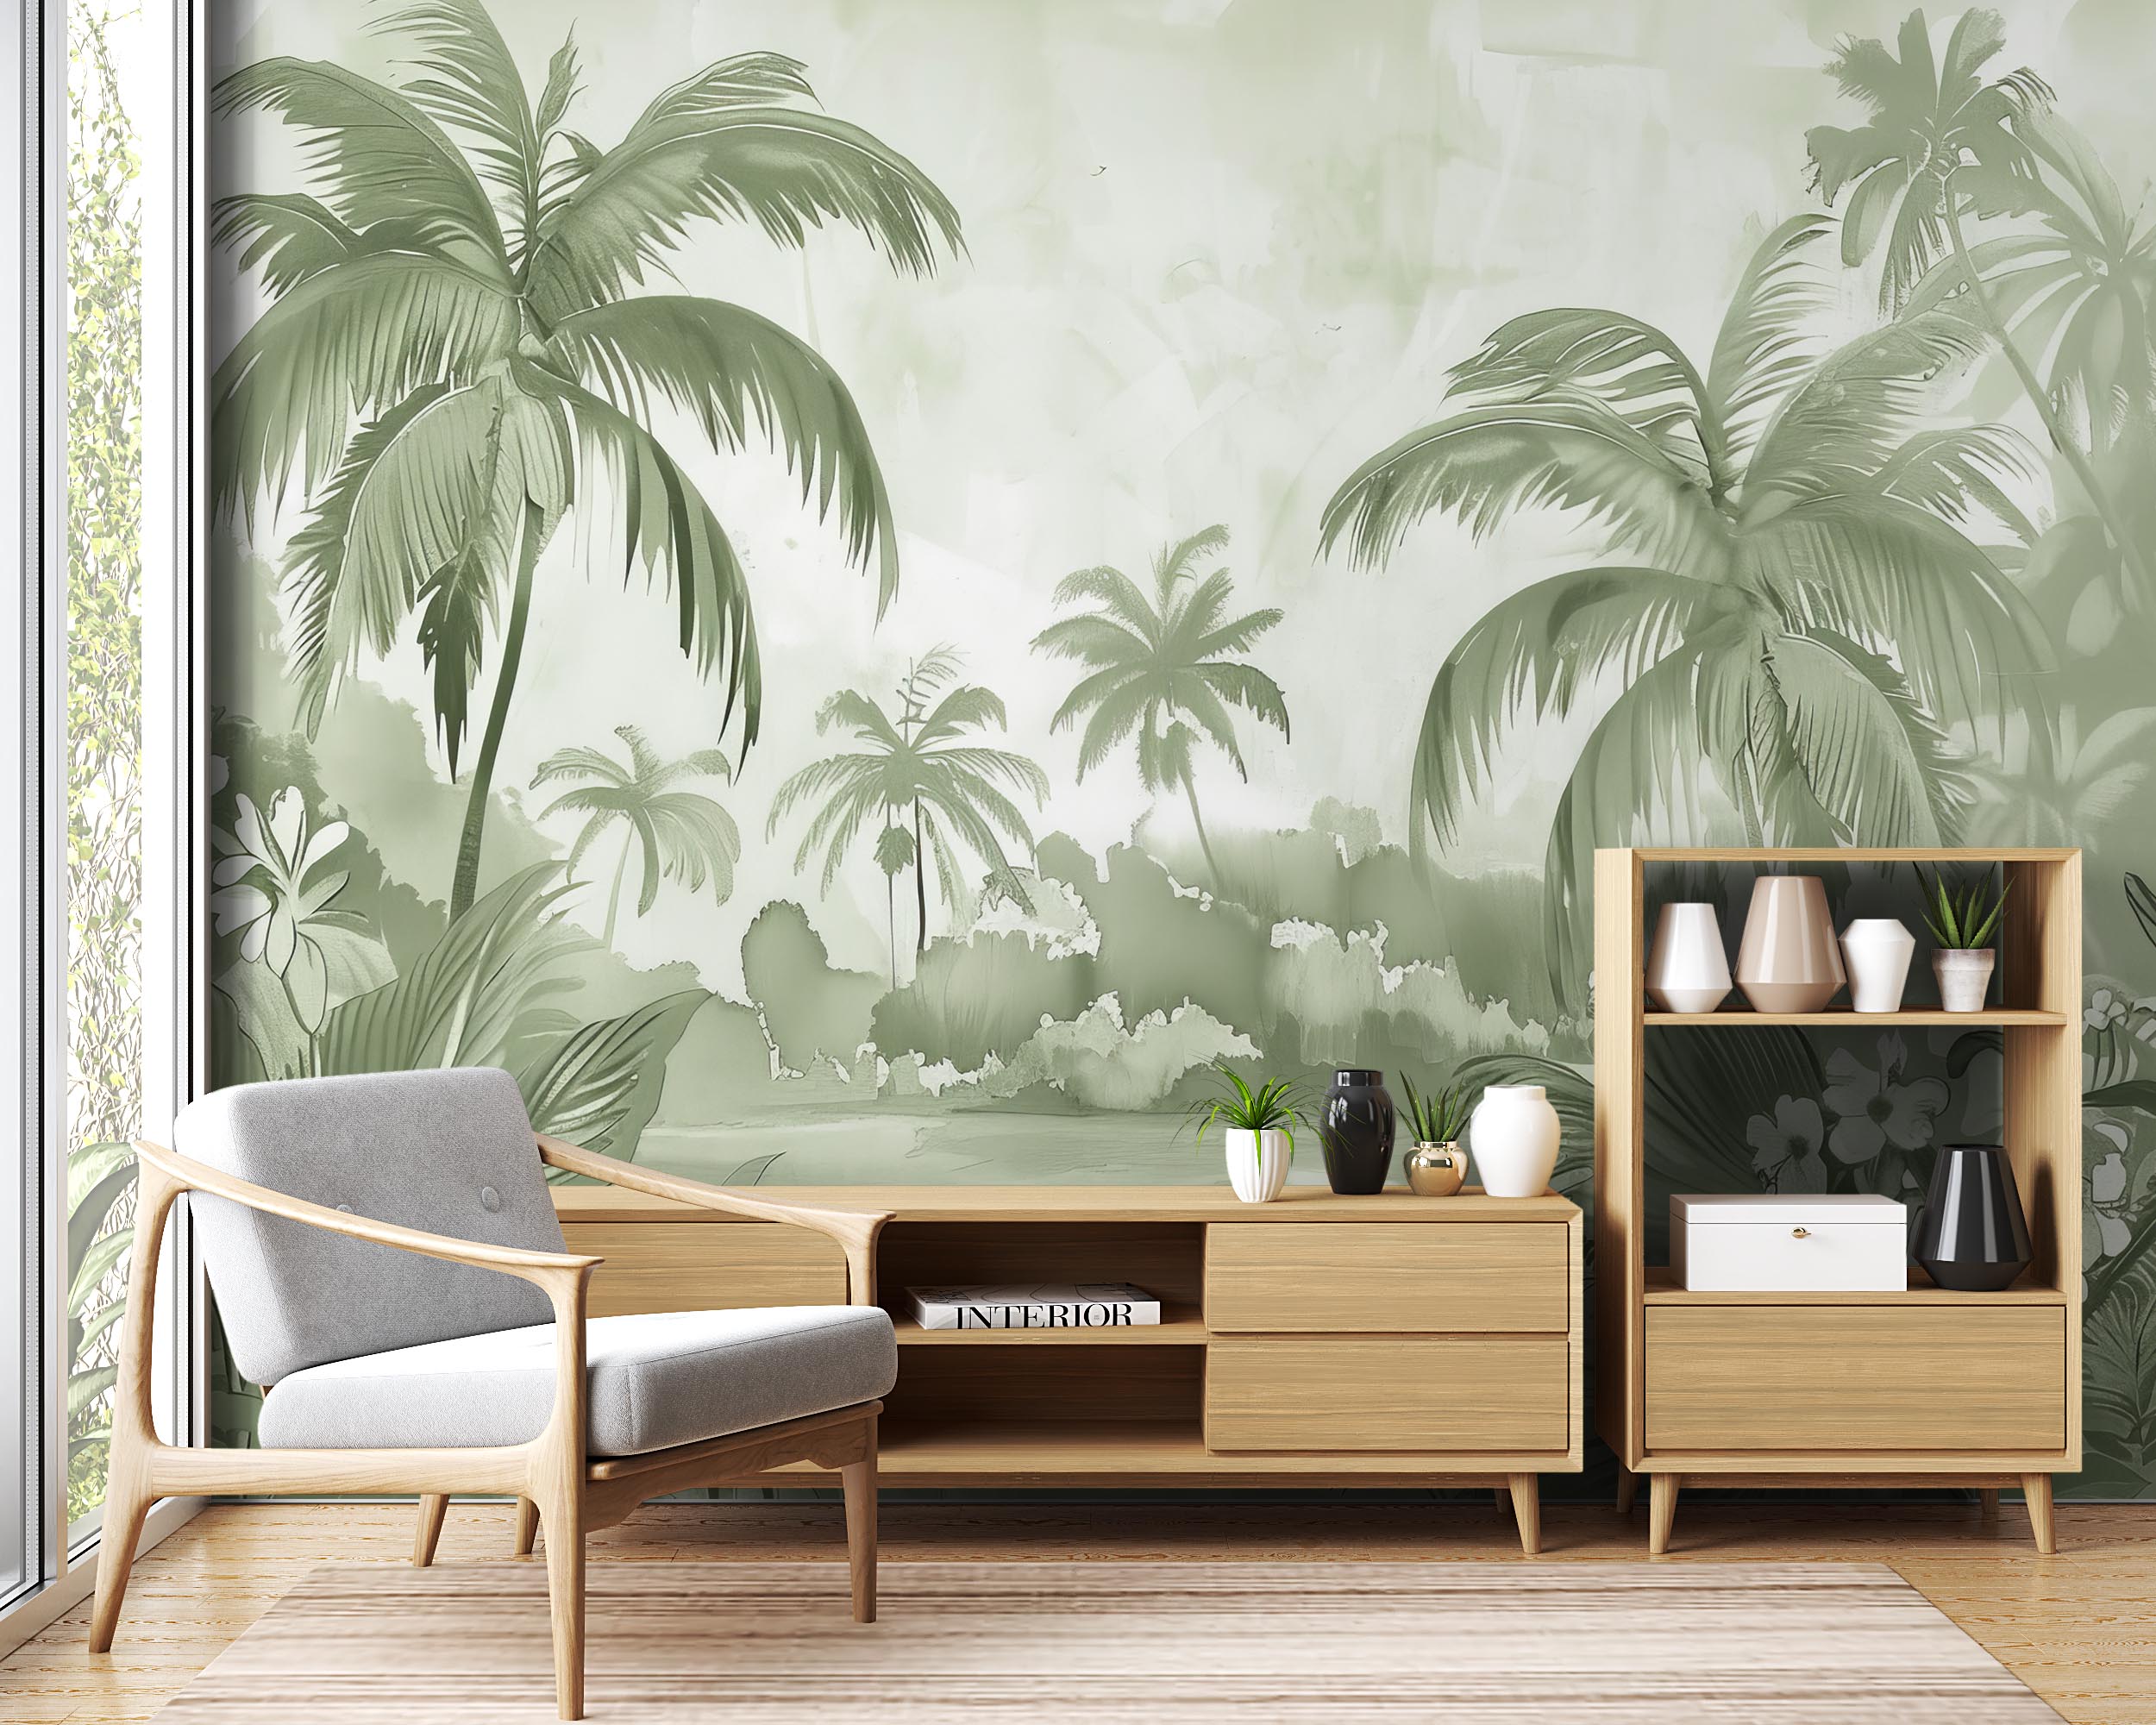 Jungle Dream – Wall Panorama in Pastel Green